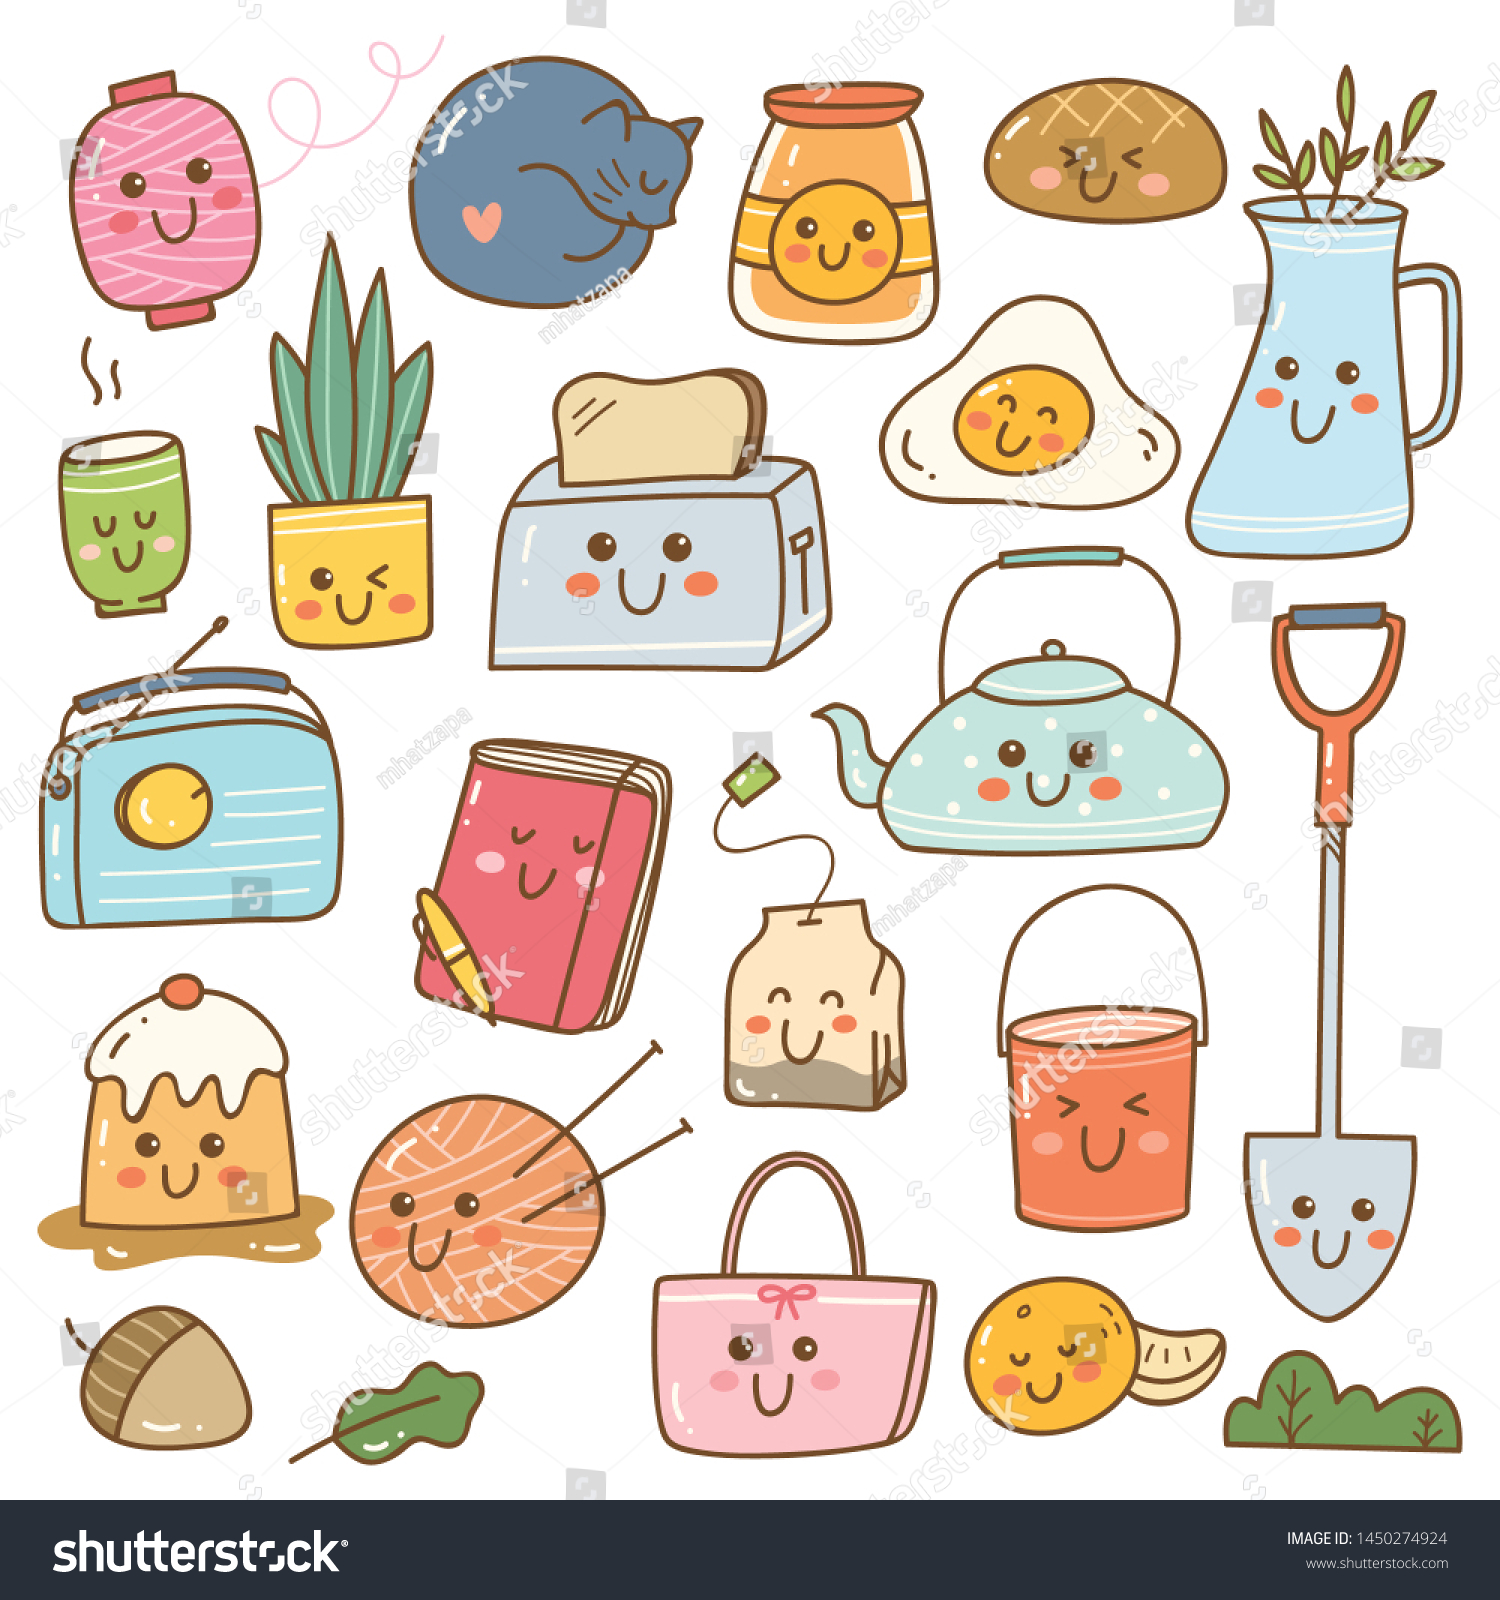 Cute Icons